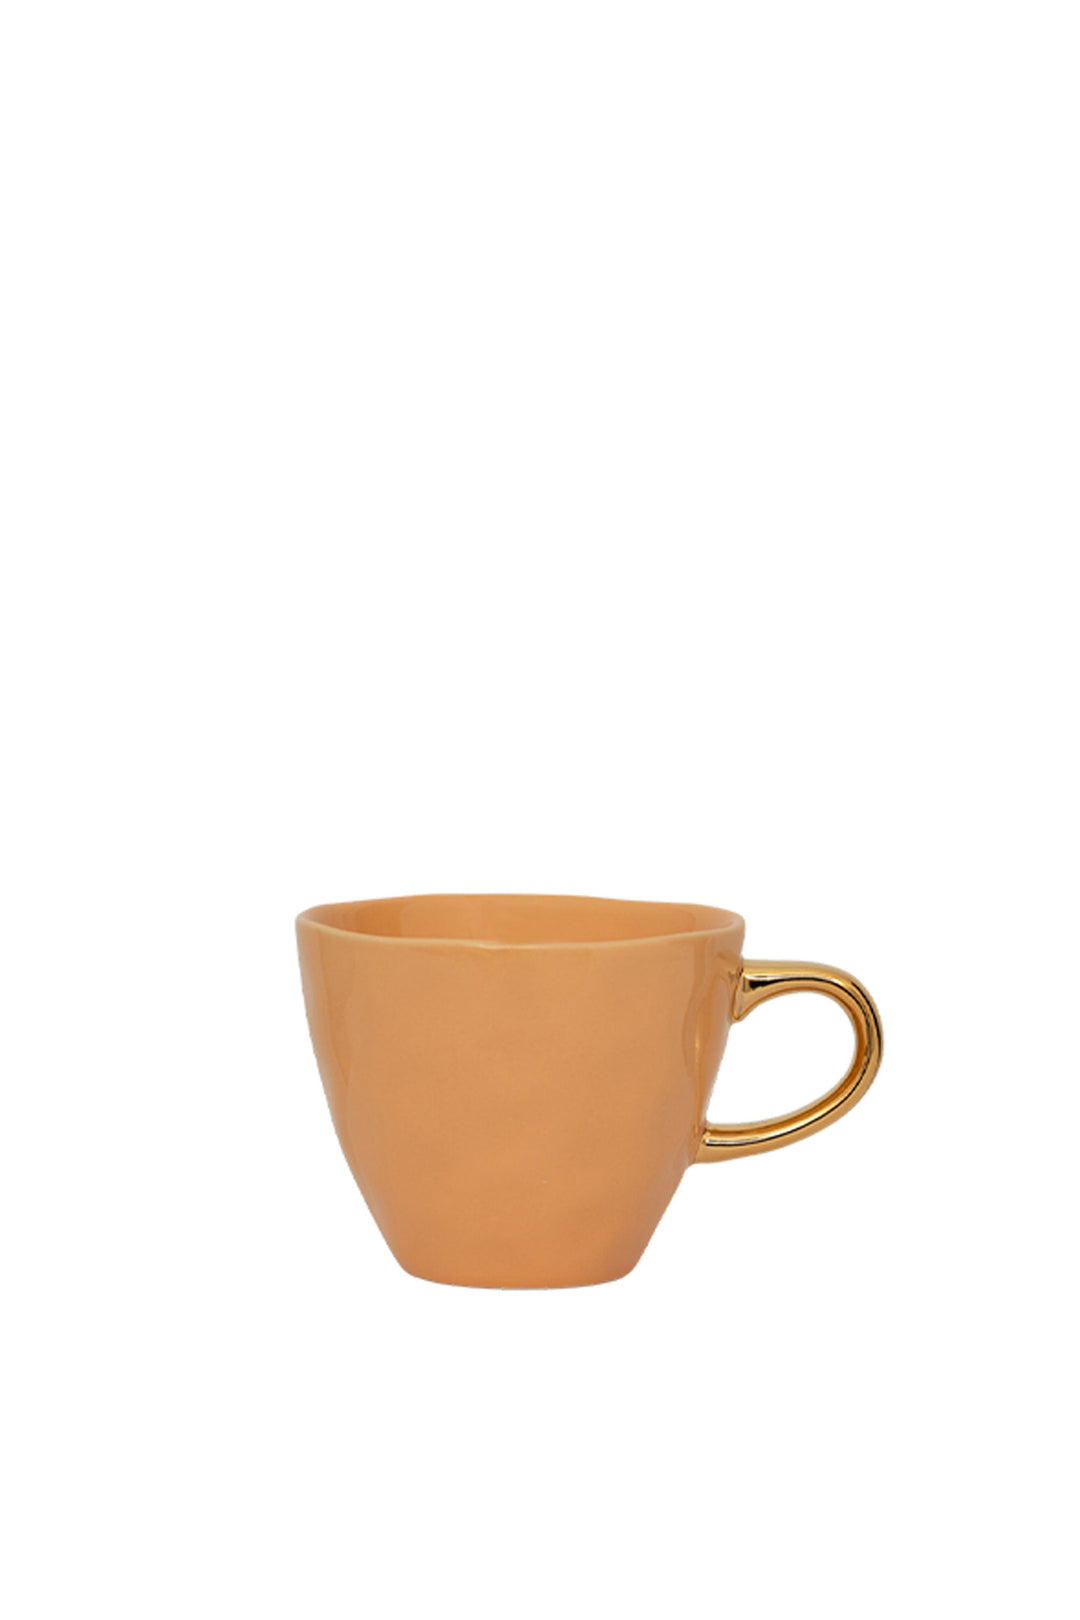 Husk TEA CUP - Apricot